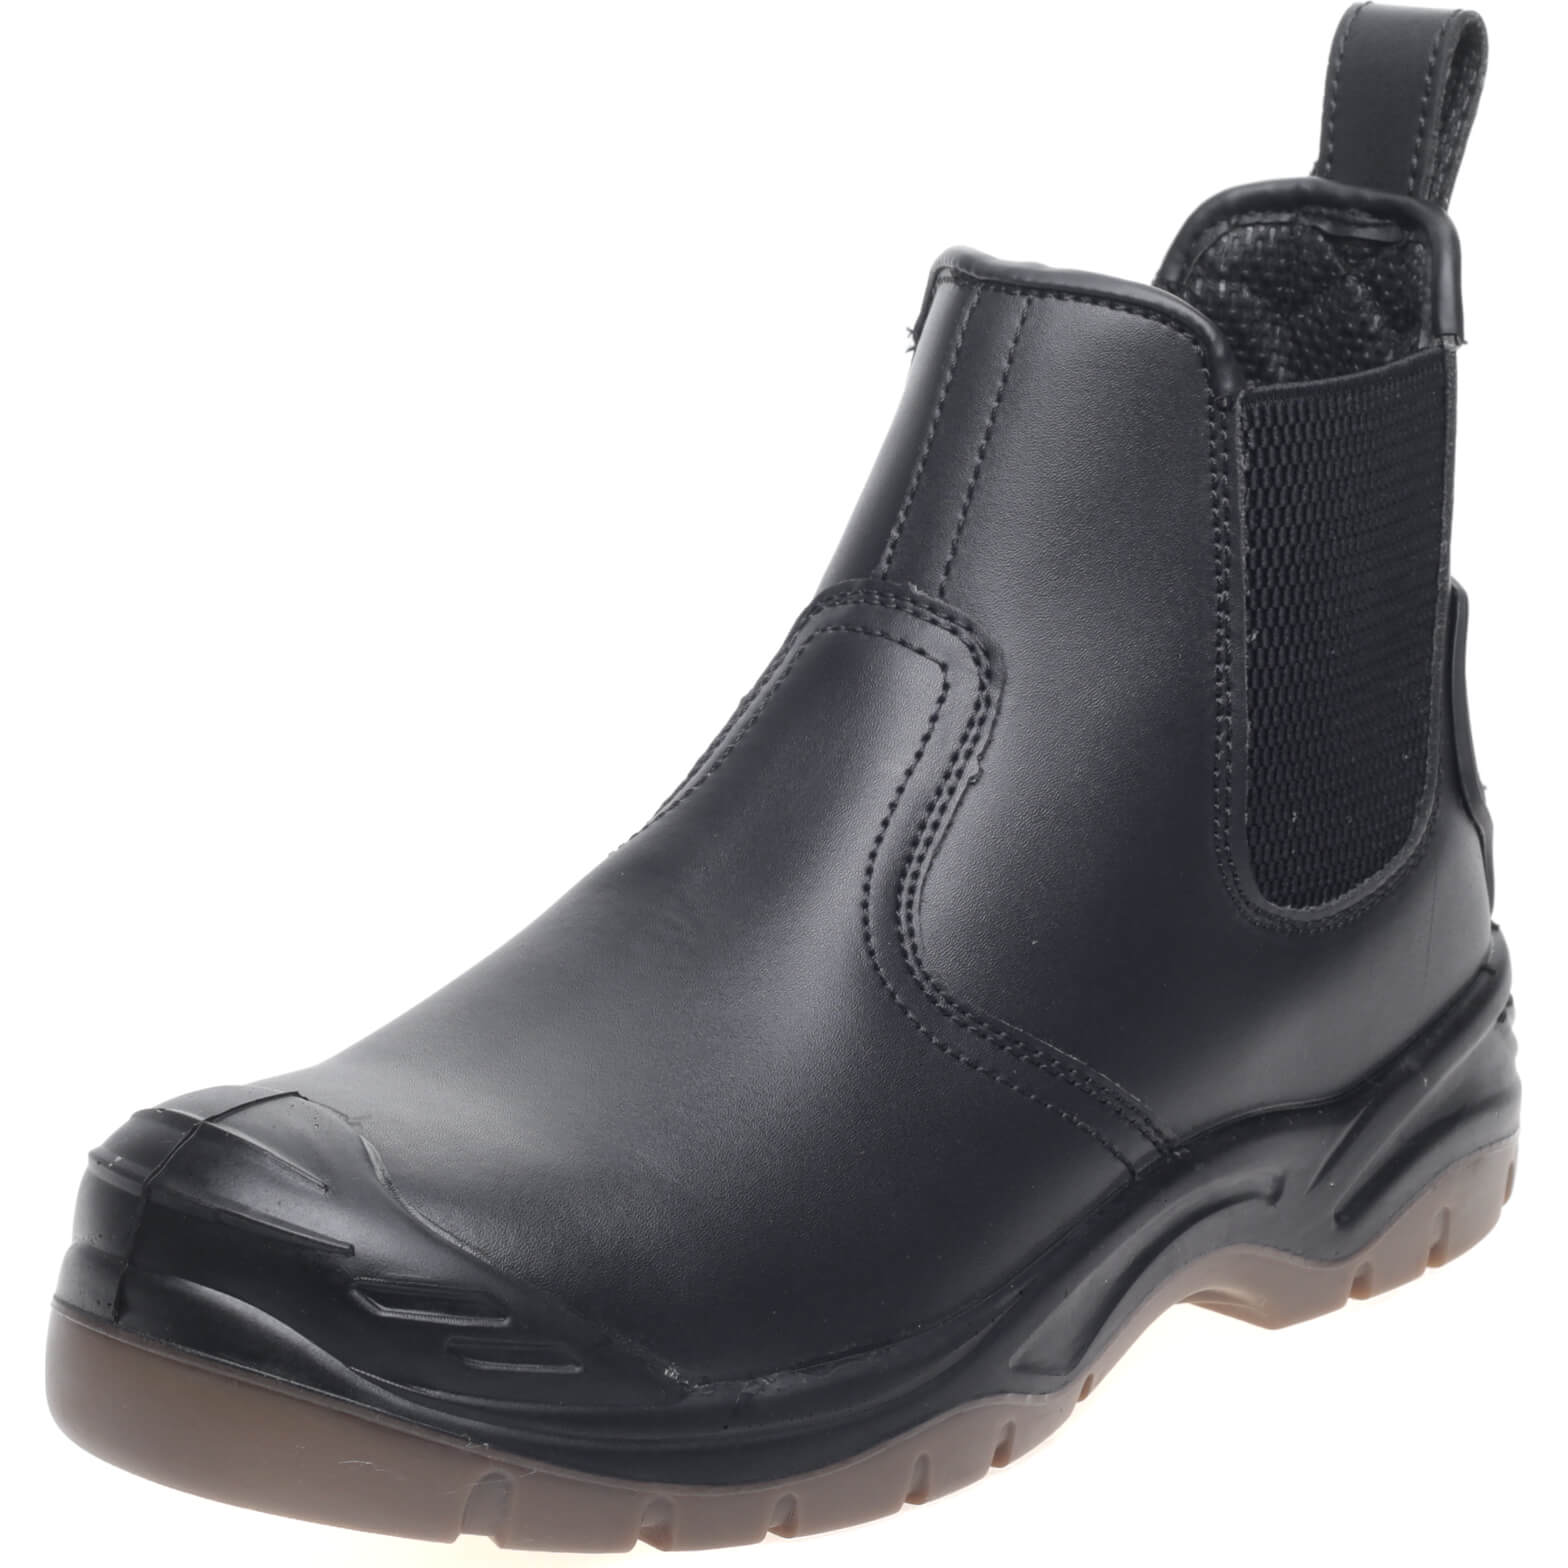 Image of Apache AP71 Safety Dealer Boots Black Size 9